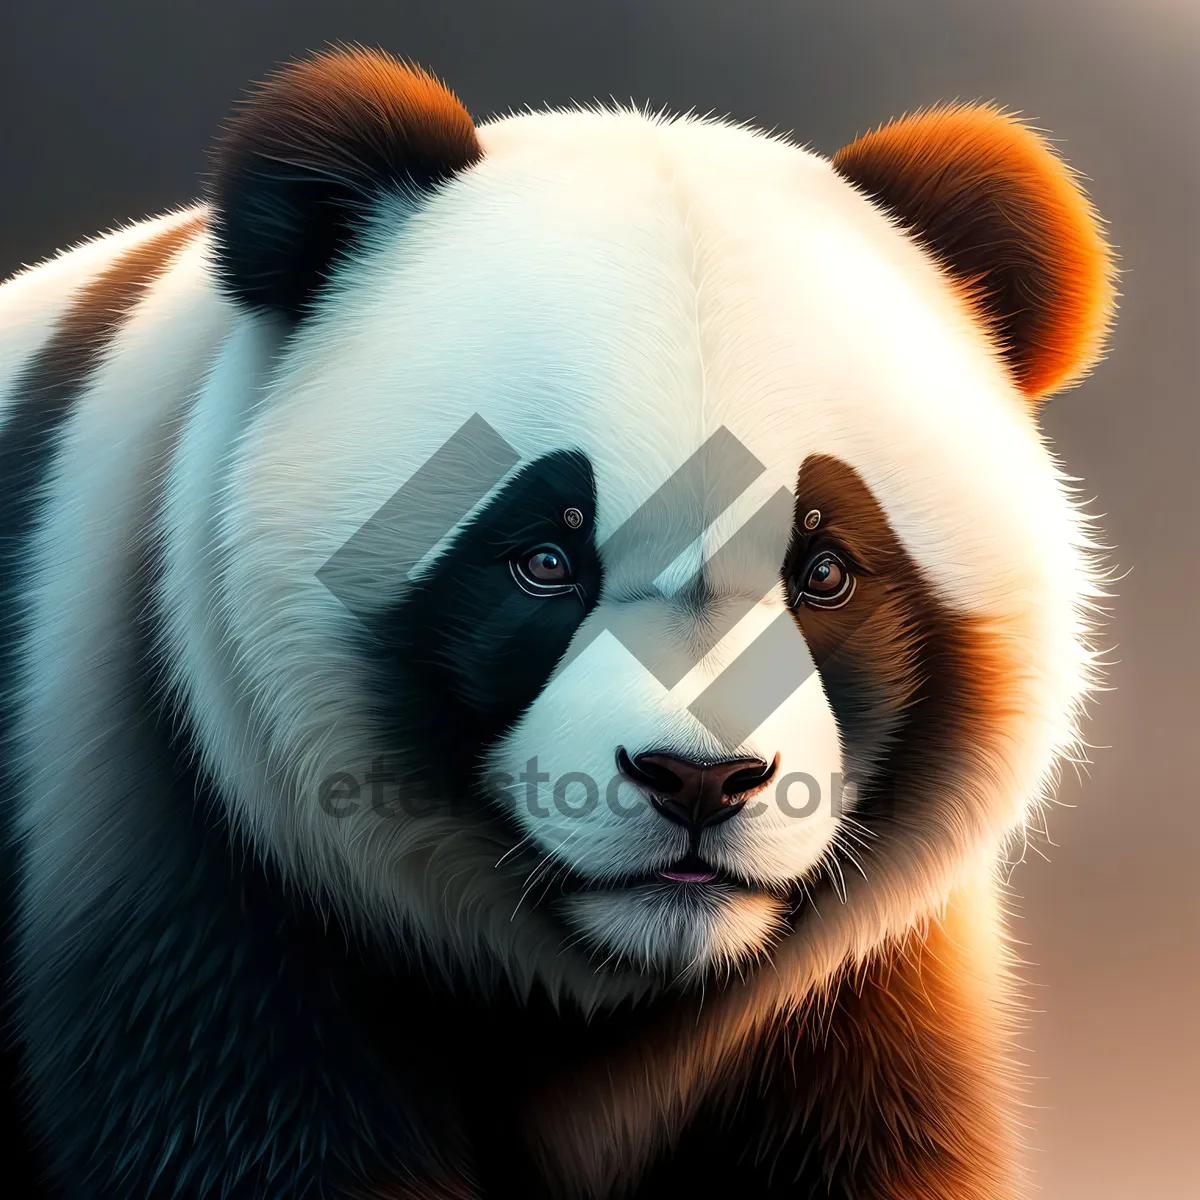 Picture of Furry Giant Panda Cub in Zoo Habitat